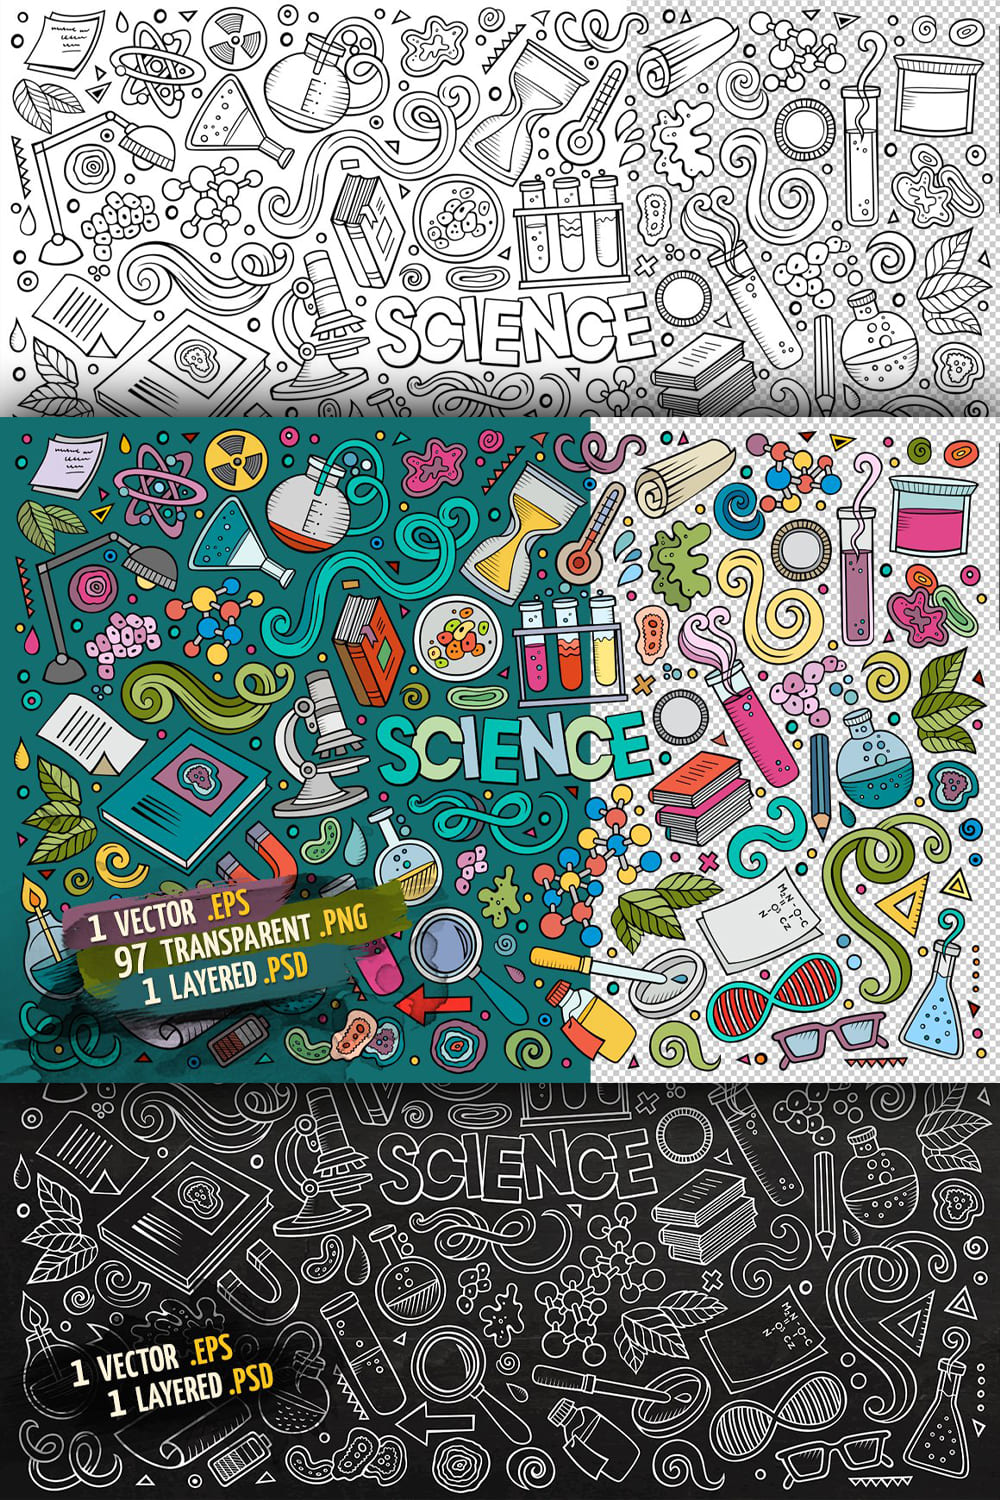 Science Objects Elements Set Pinterest 1000 1500.